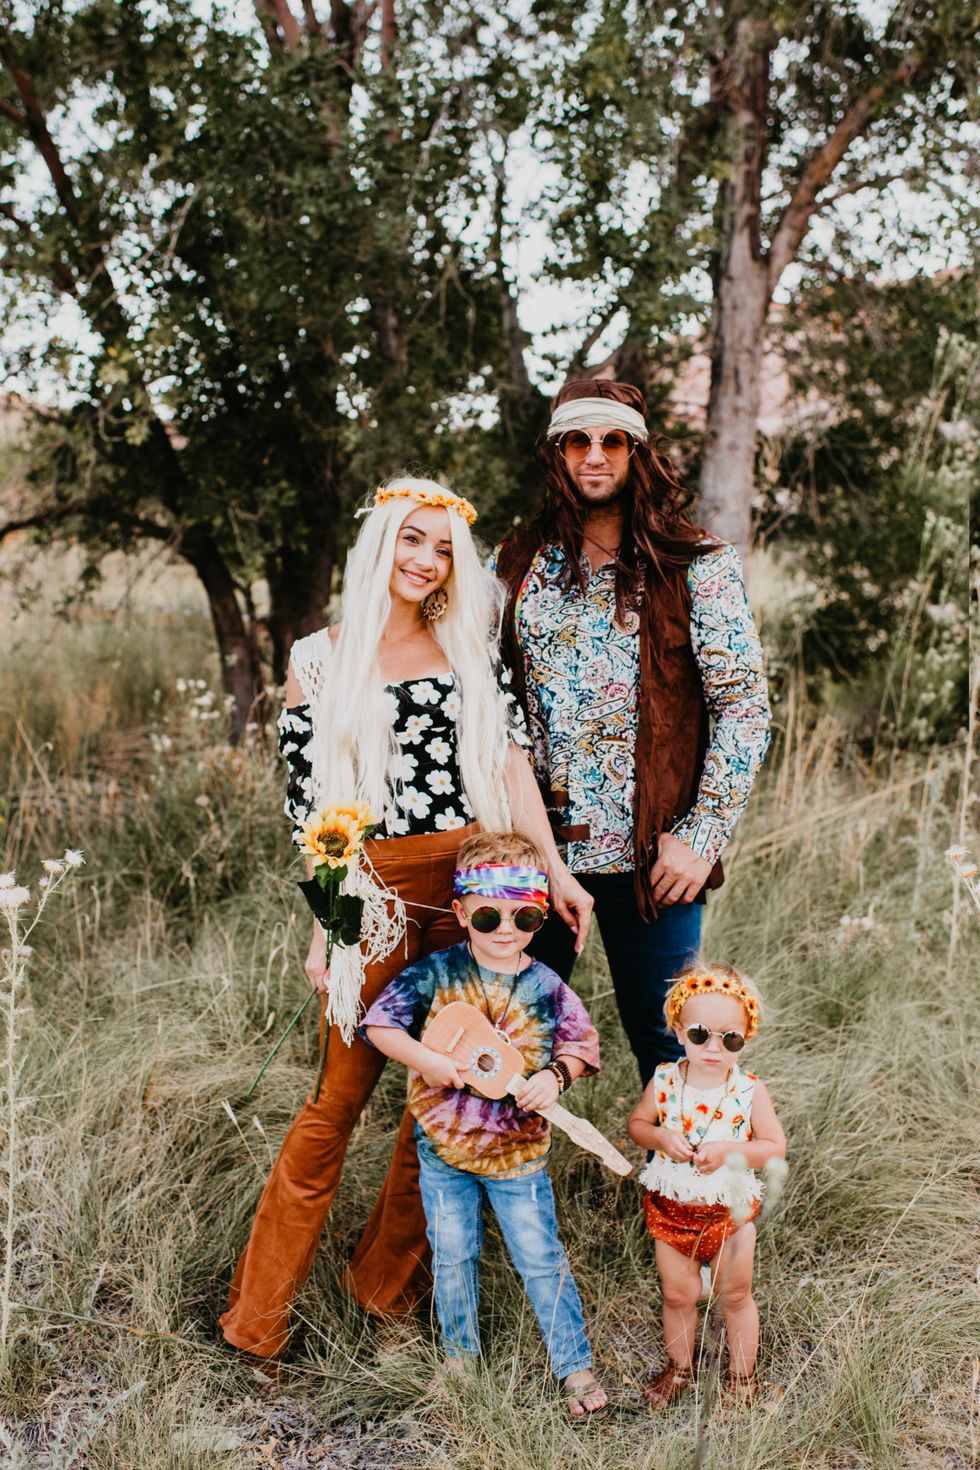 4 Pcs/Set Sunflower Hippie Costume Accessories for Women Peace Sign  Necklace Boho Retro Daisy Headband 70s Hippie Accessories 60s Costume  Sunglasses